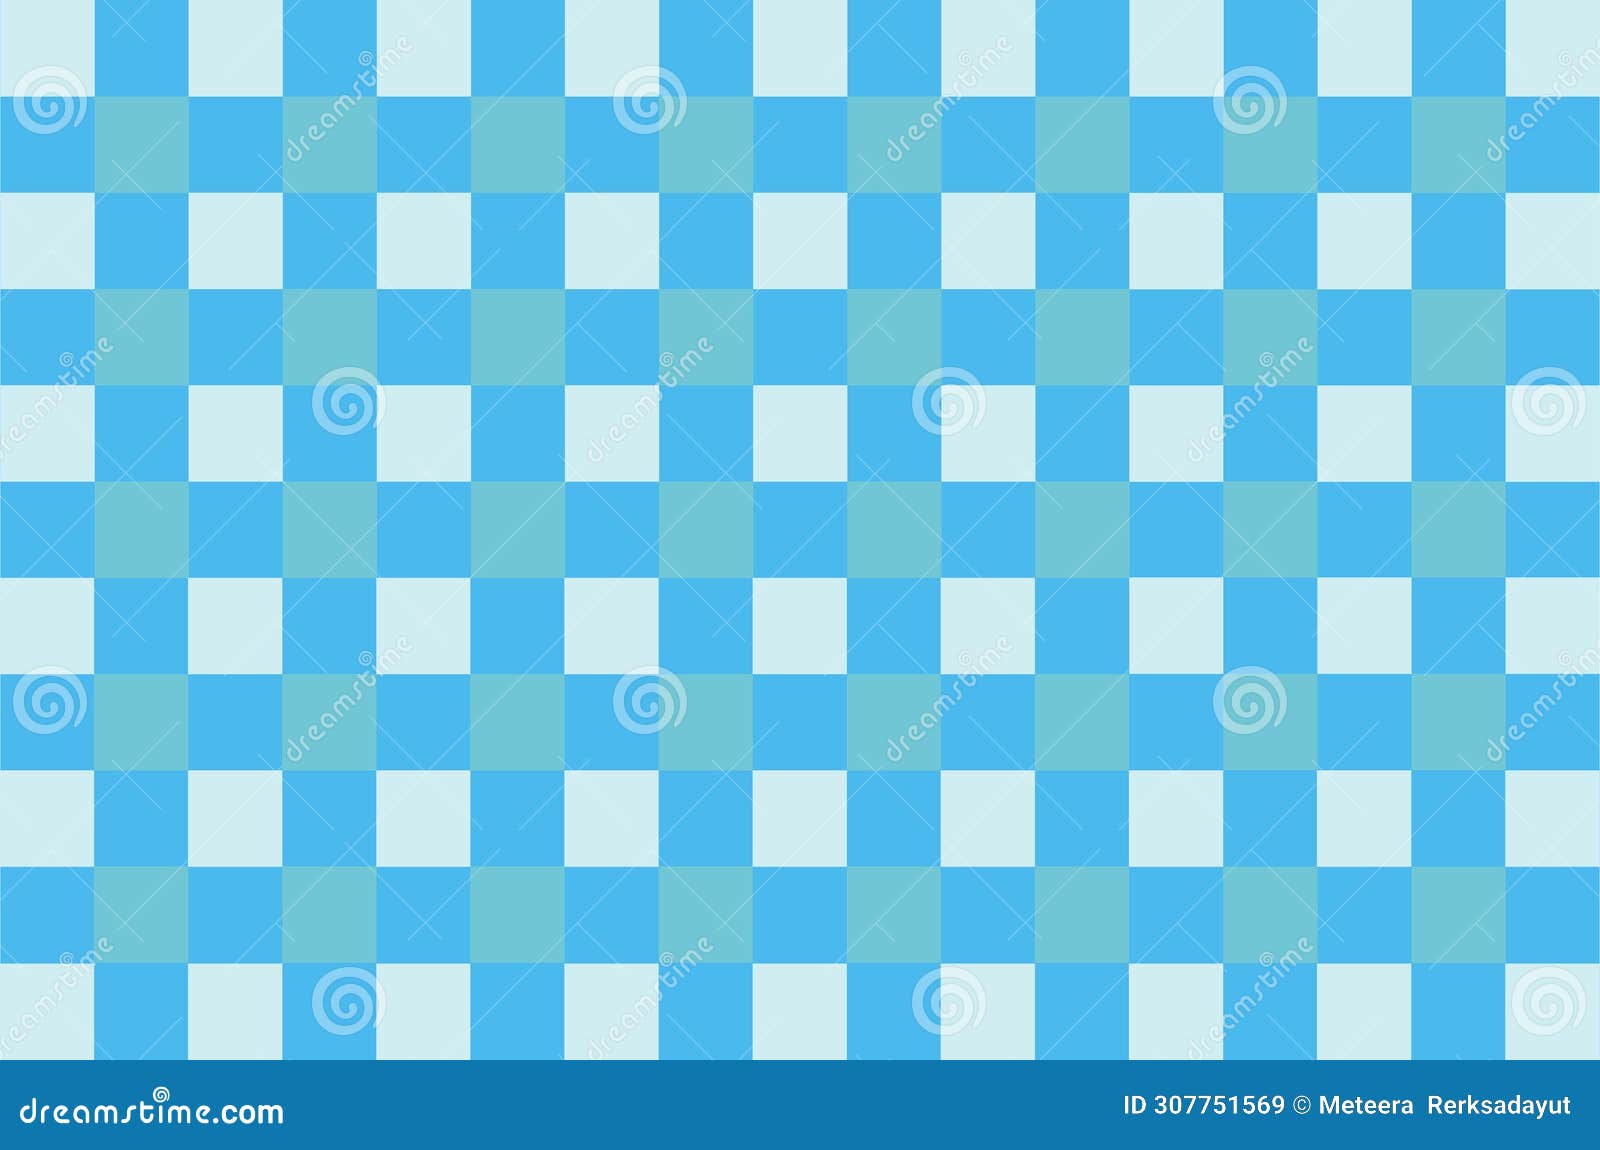 tablecloth : blue interlace pattern